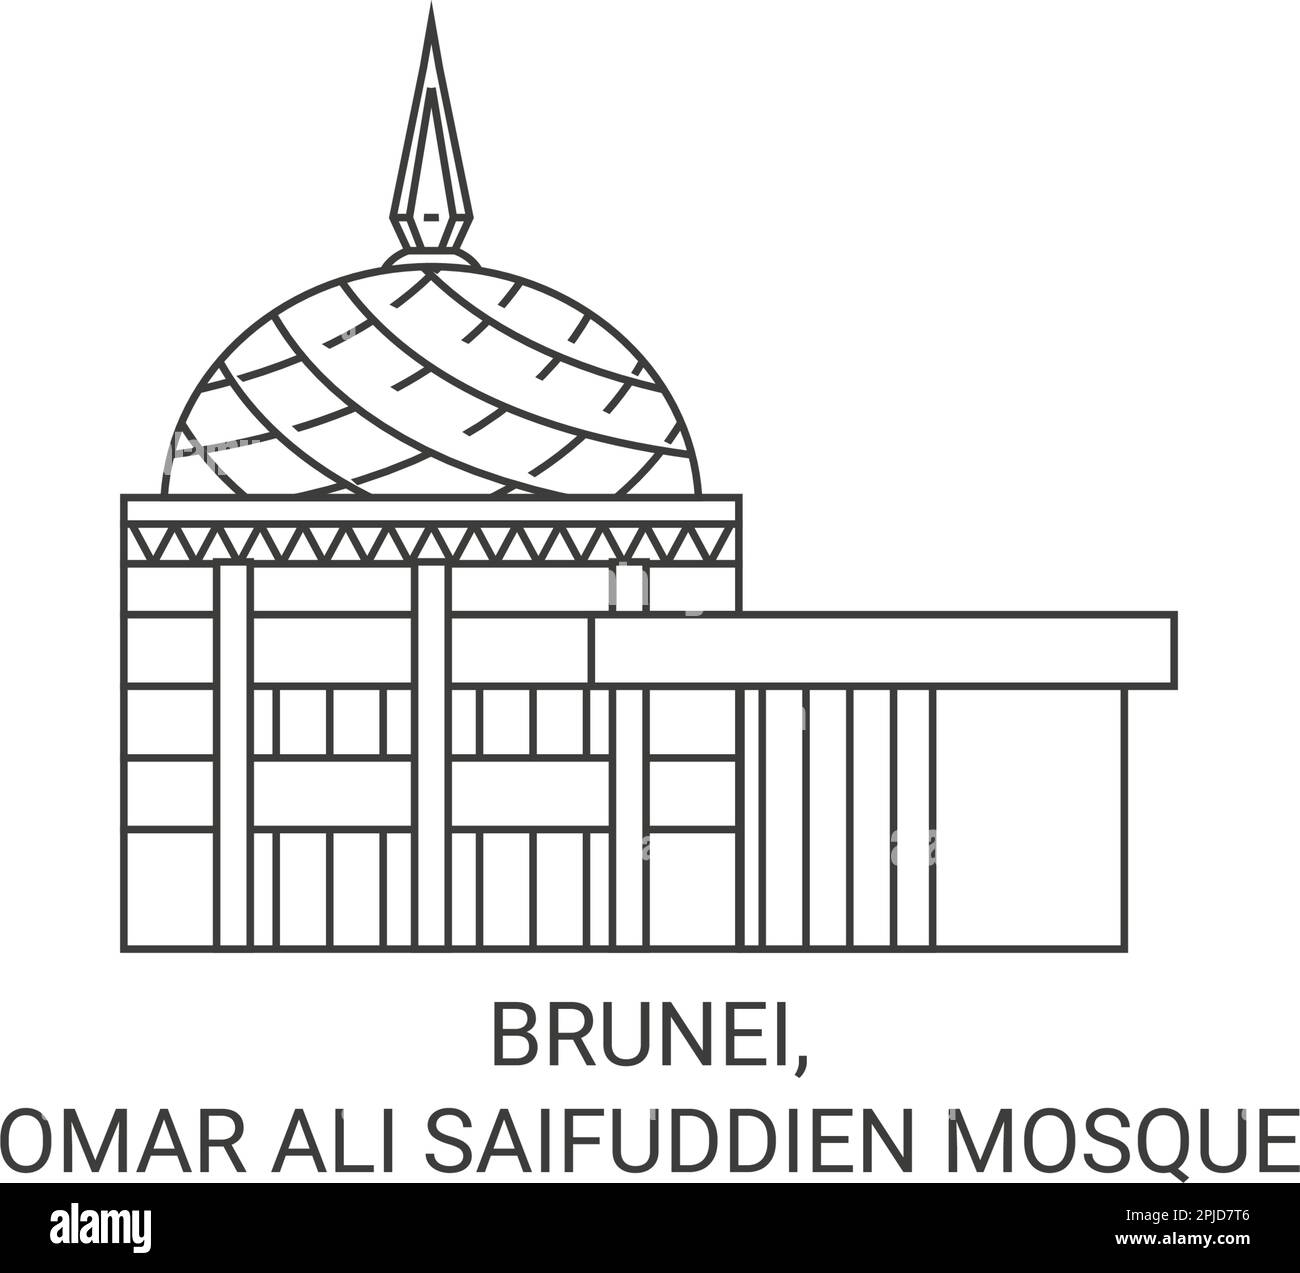 Brunei, Omar Ali Saifuddien Mosque travel landmark vector illustration ...